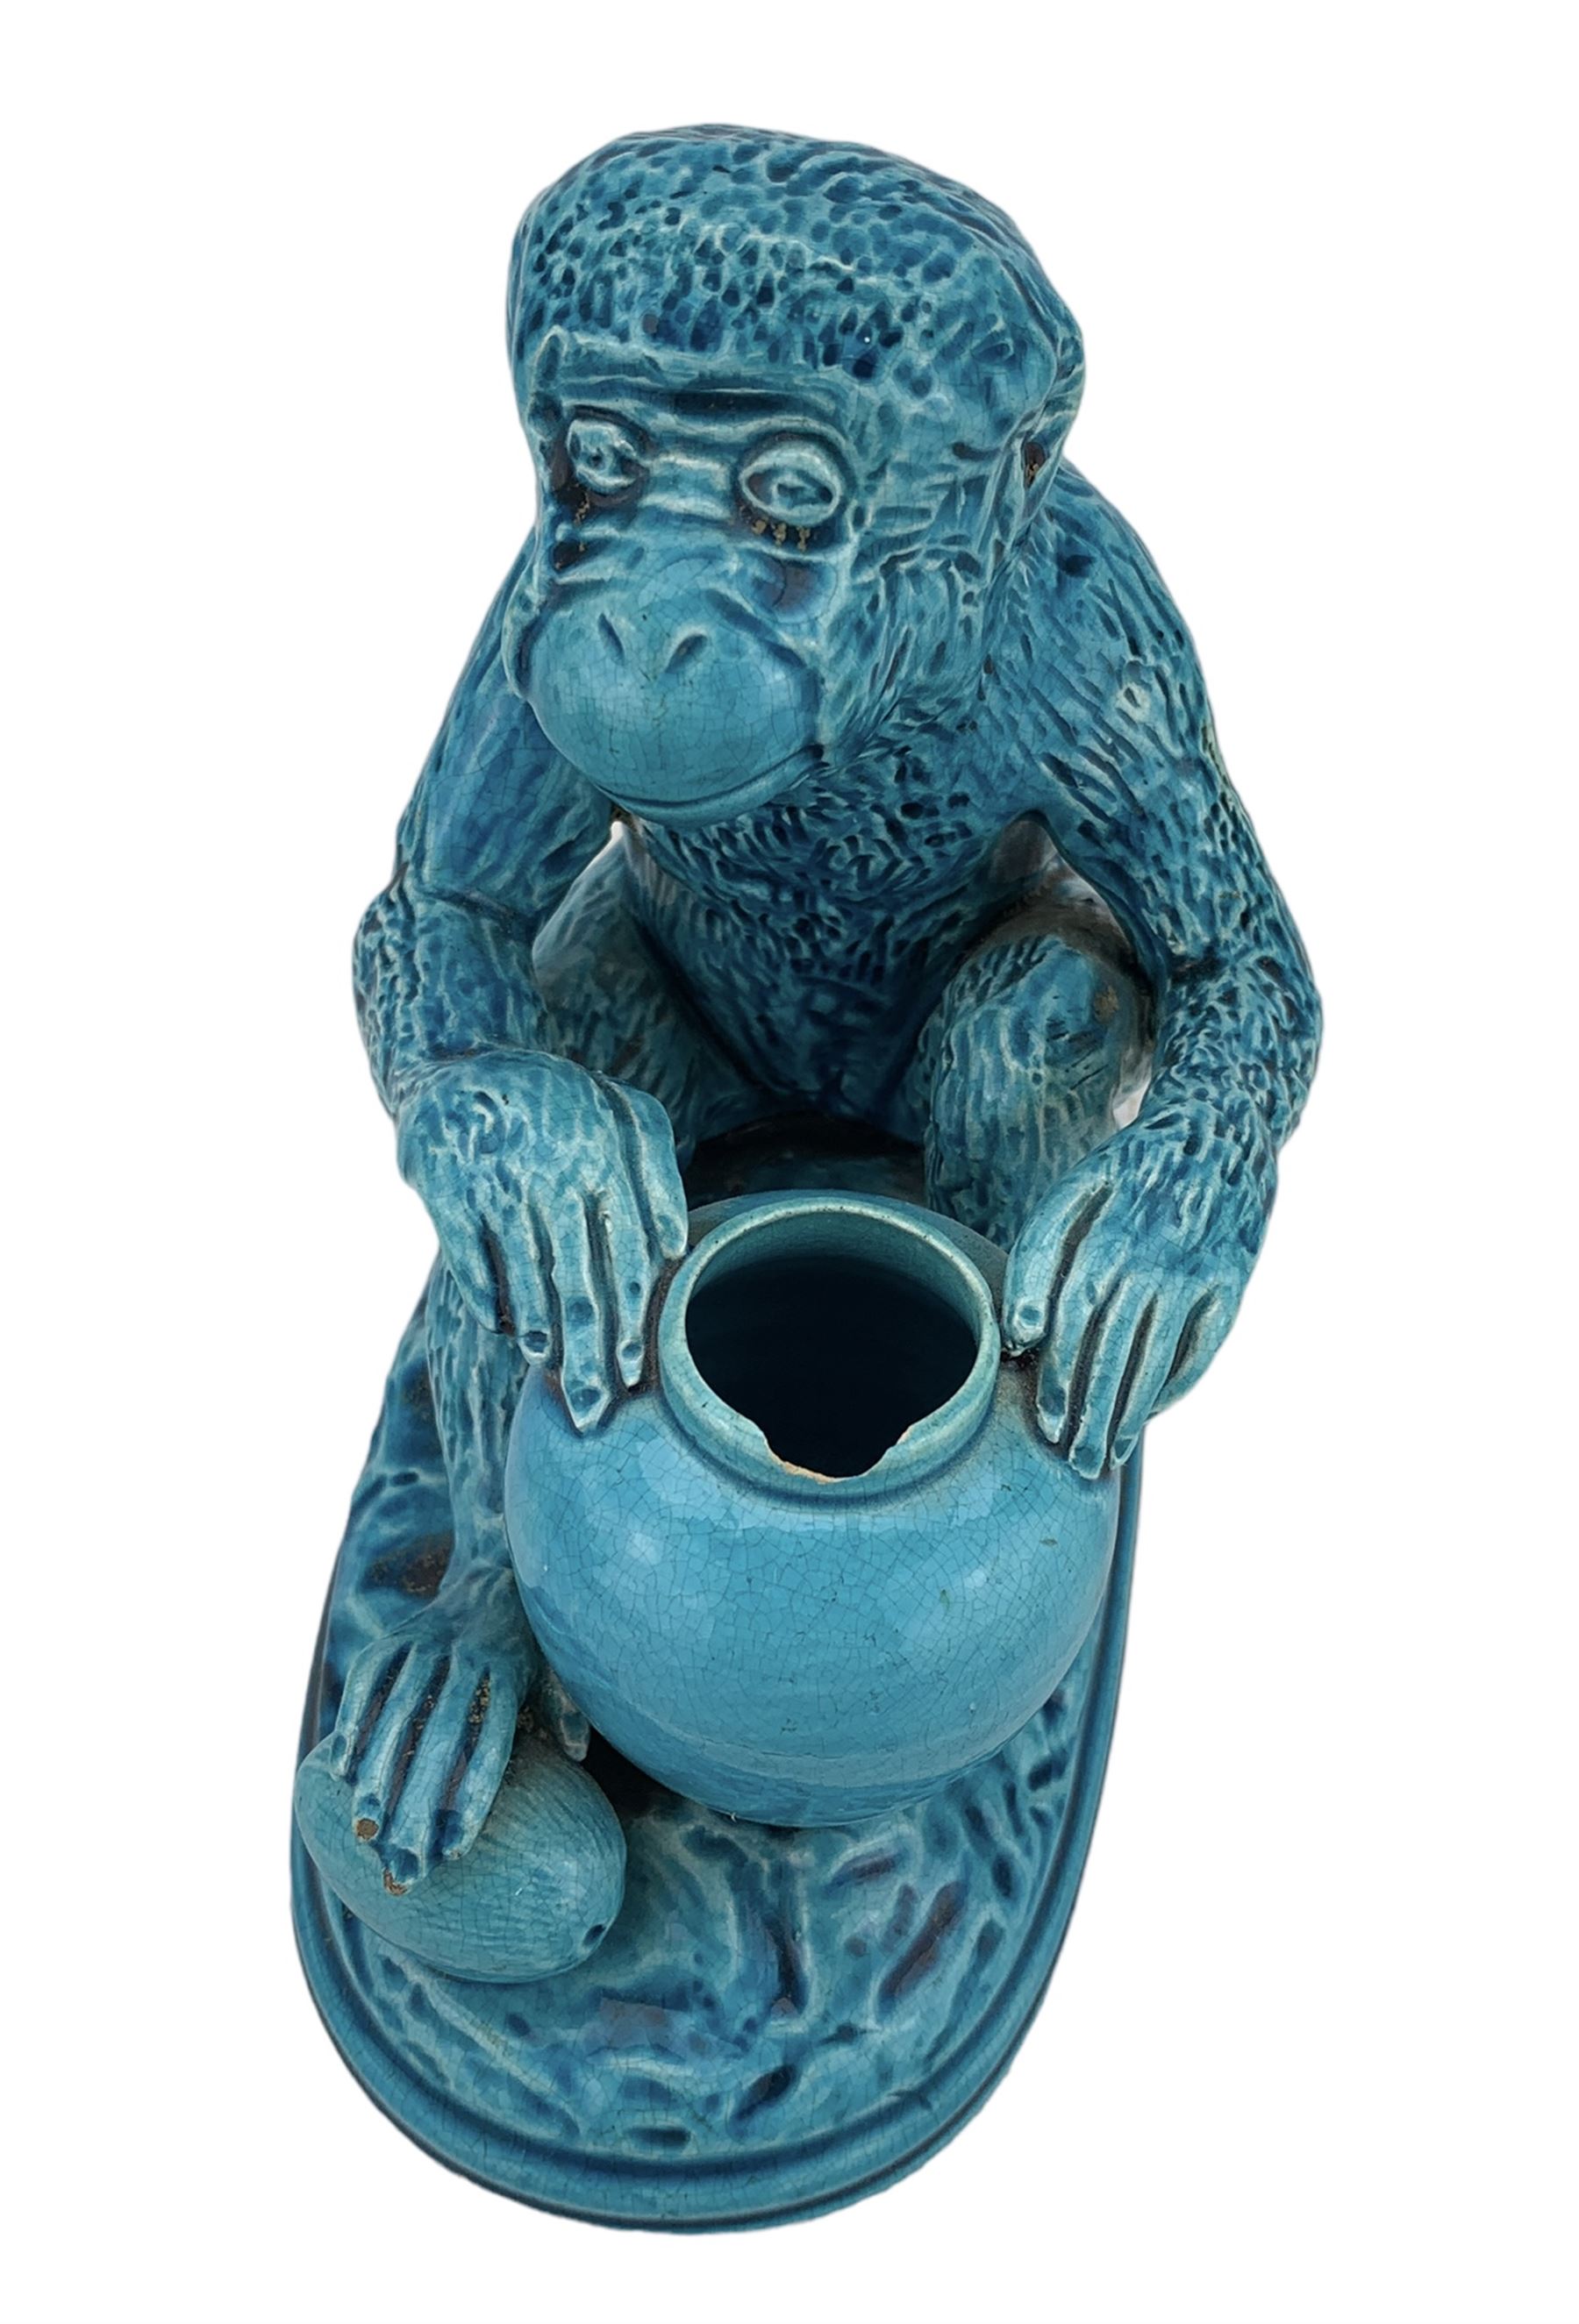 Burmantofts Faience turquoise-glaze model of a monkey - Image 5 of 6